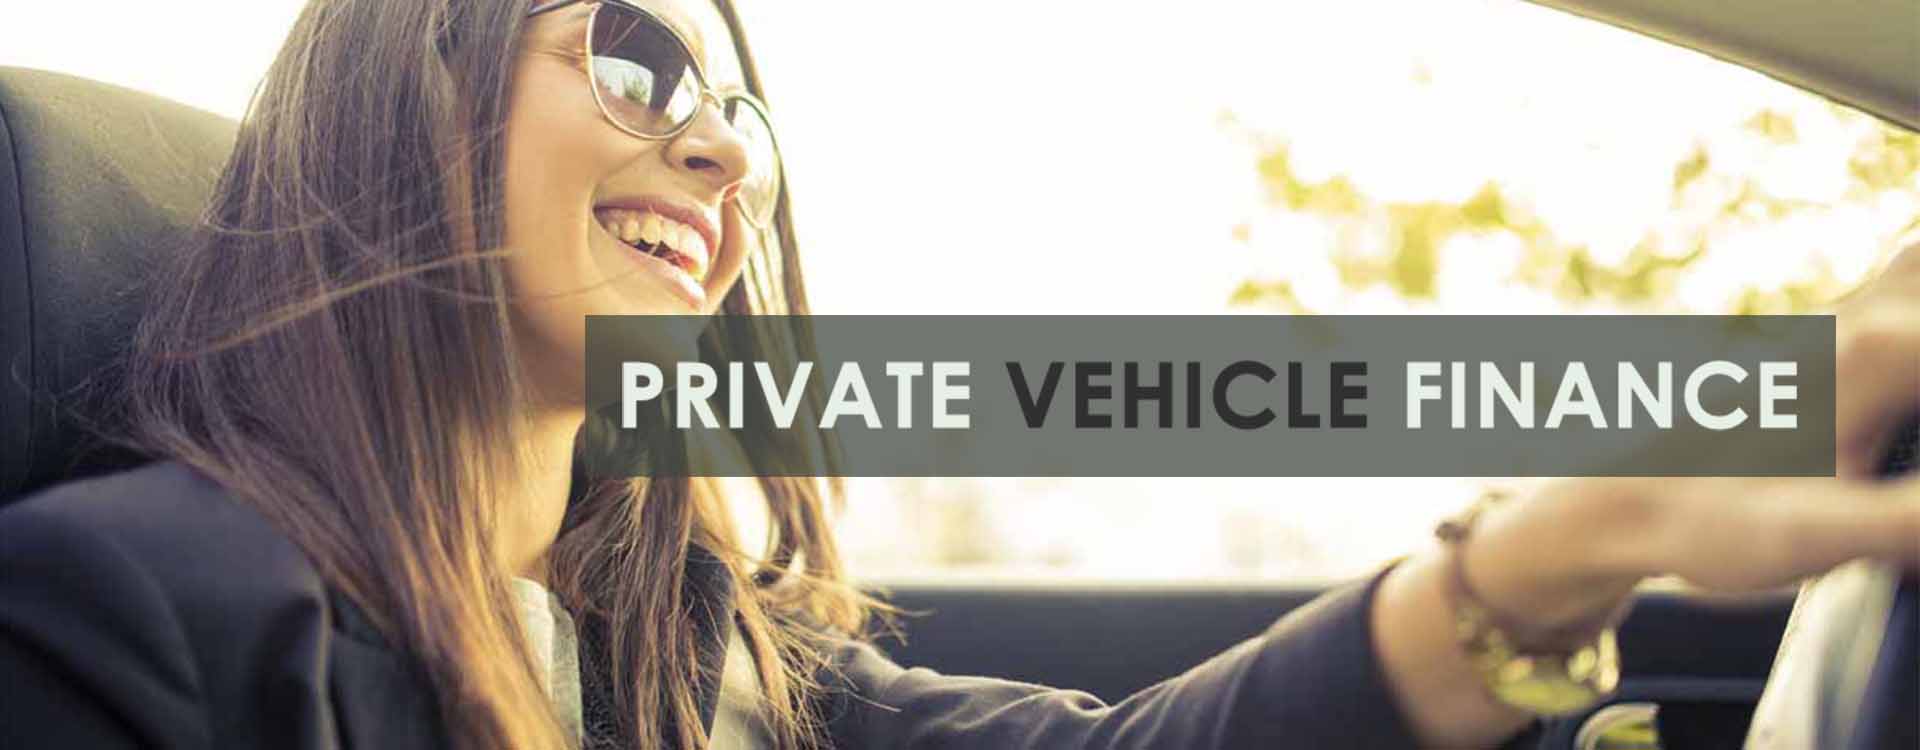 Private Vehicle Finance Slider